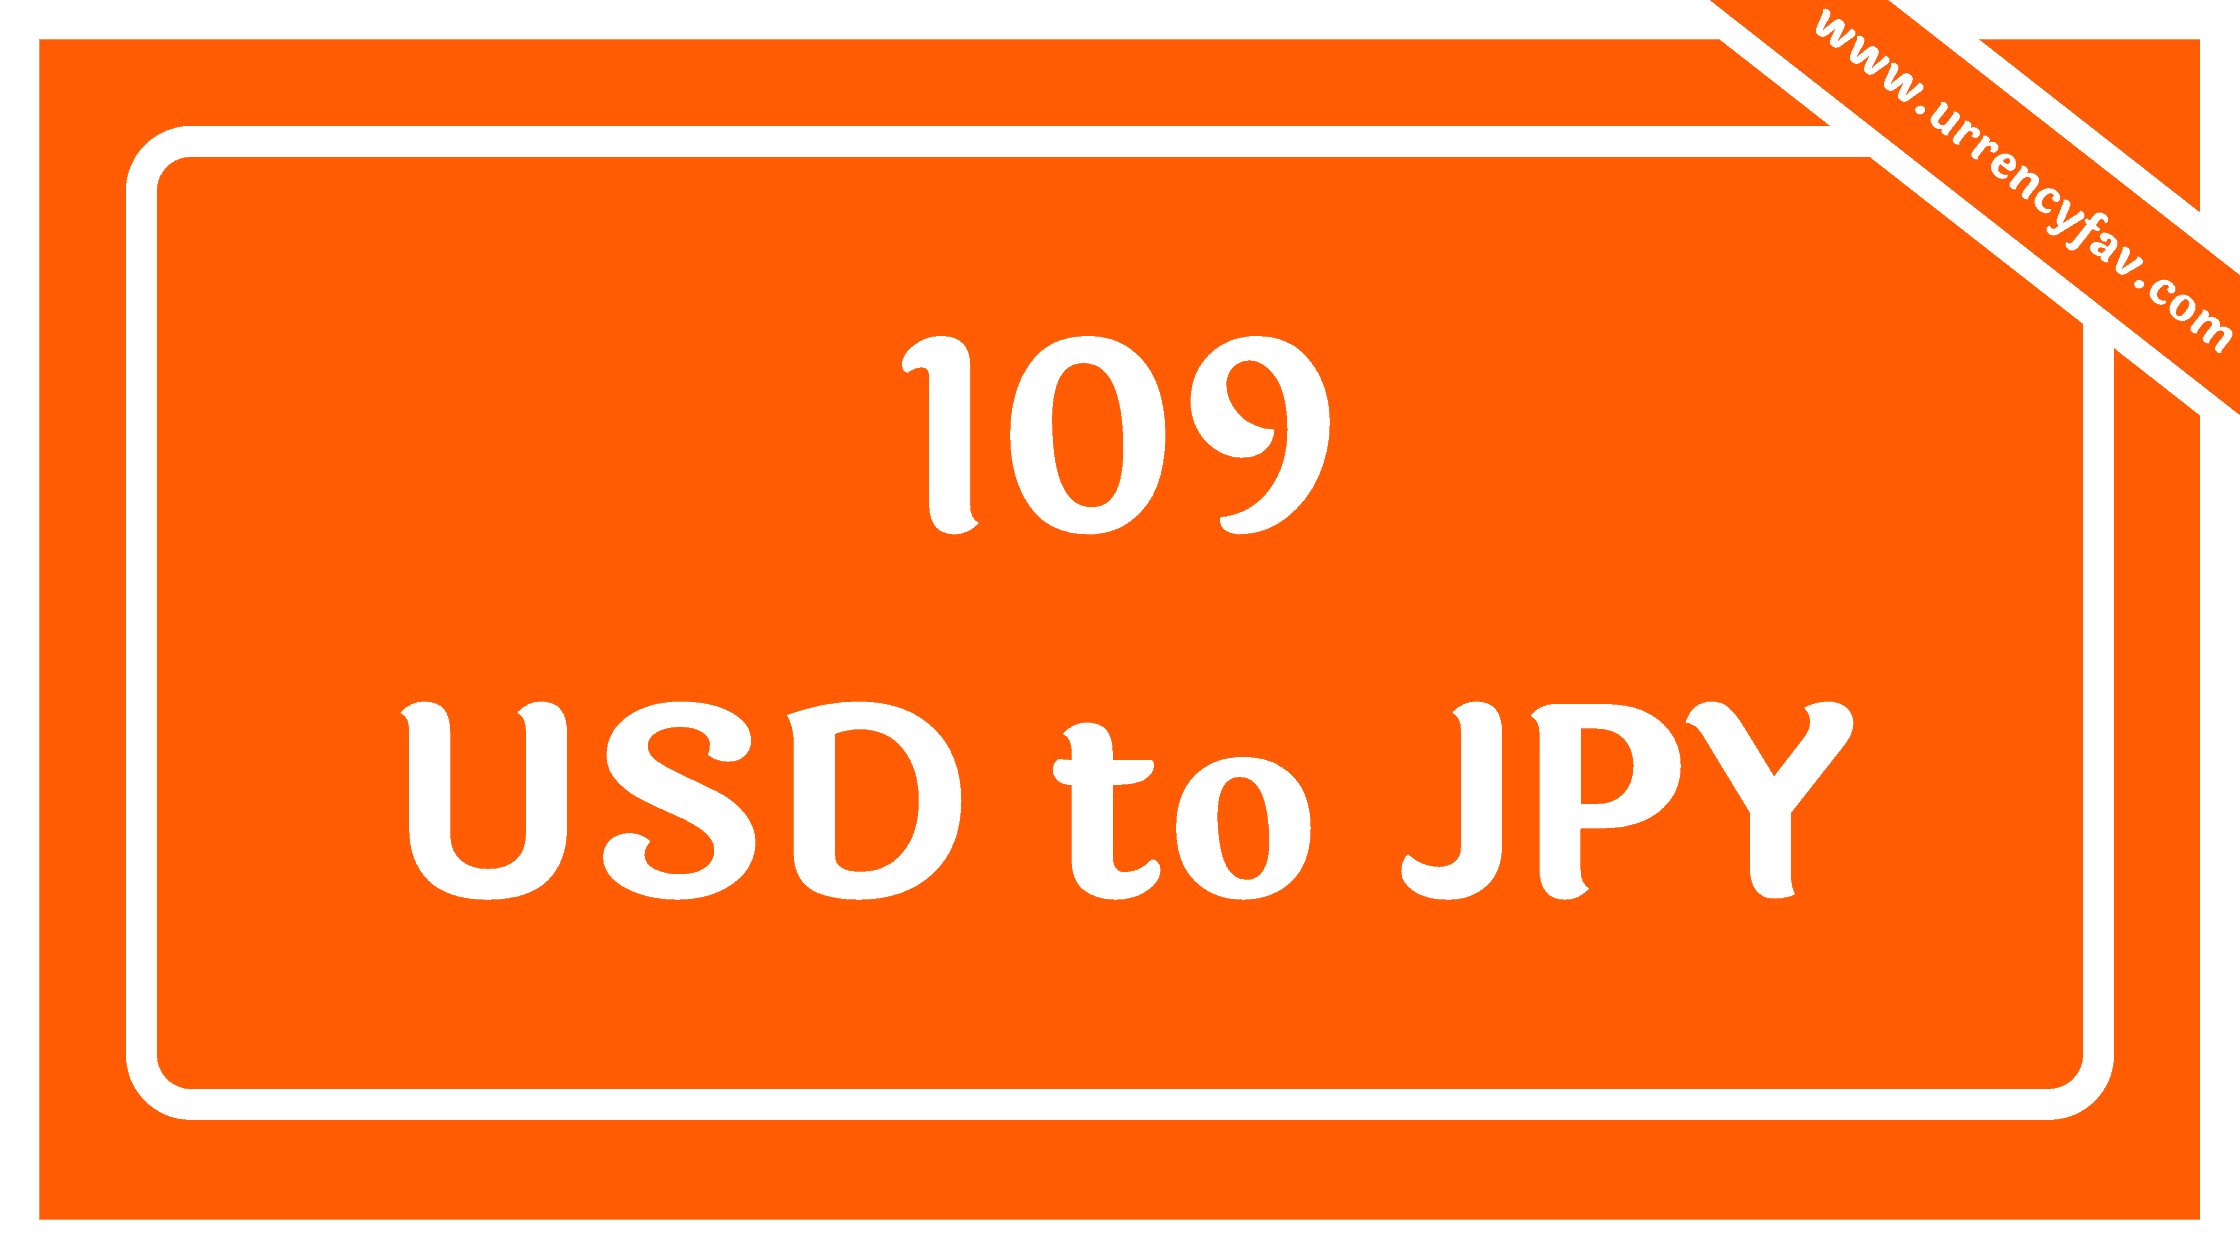 109 USD to JPY